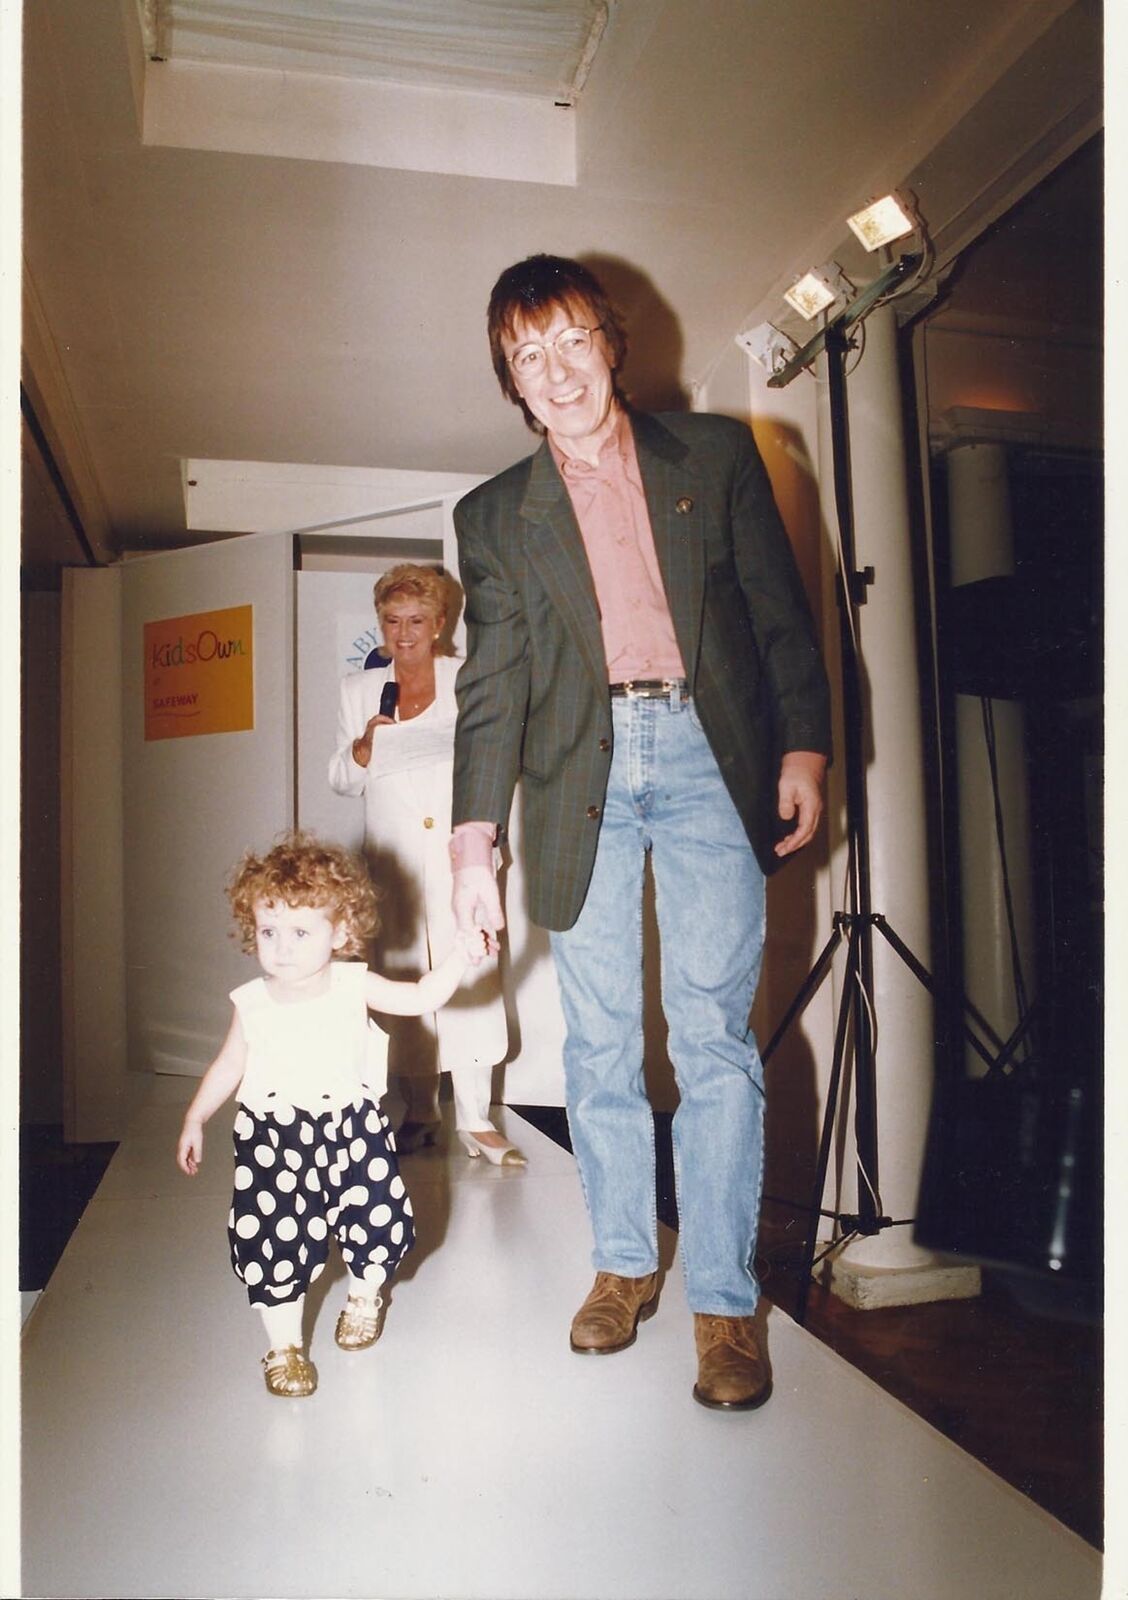 Bill Wyman, Rolling Stones Bass Player & Daughter Original Press Photo 1990's